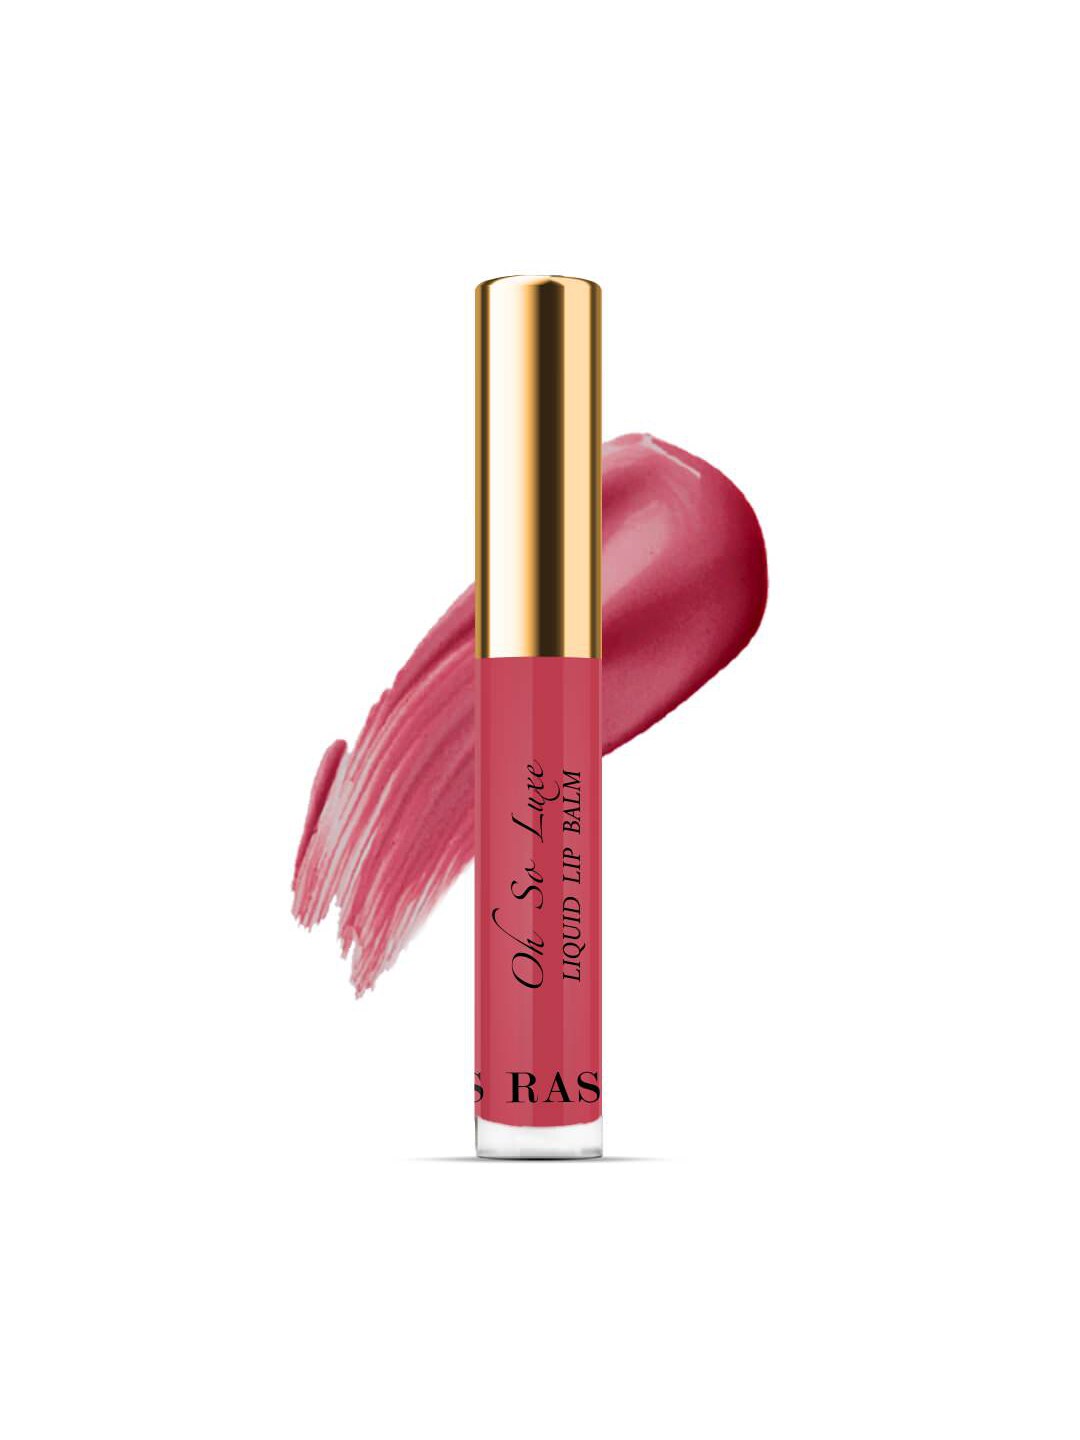 RAS LUXURY OILS Mauve Pink Oh-So-Luxe Tinted Liquid Lip Balm Price in India